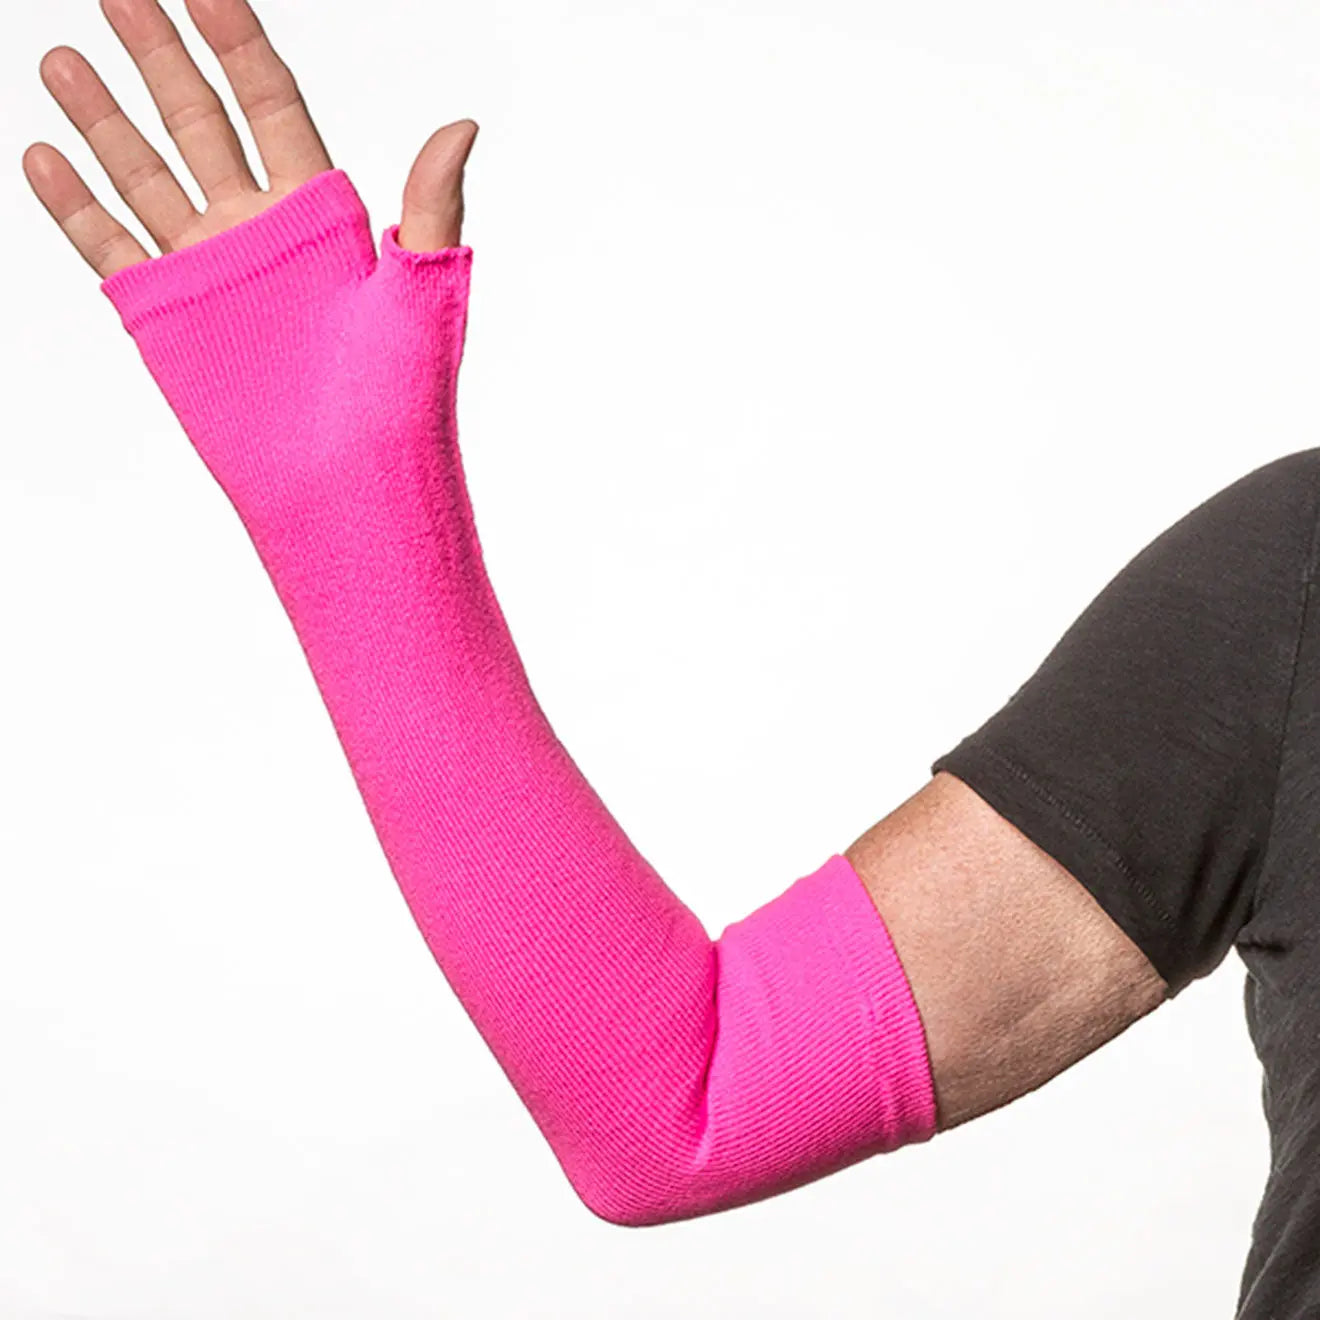 Long Fingerless Gauntlet Gloves - Weak thin skin protection (pair) Limbkeepers